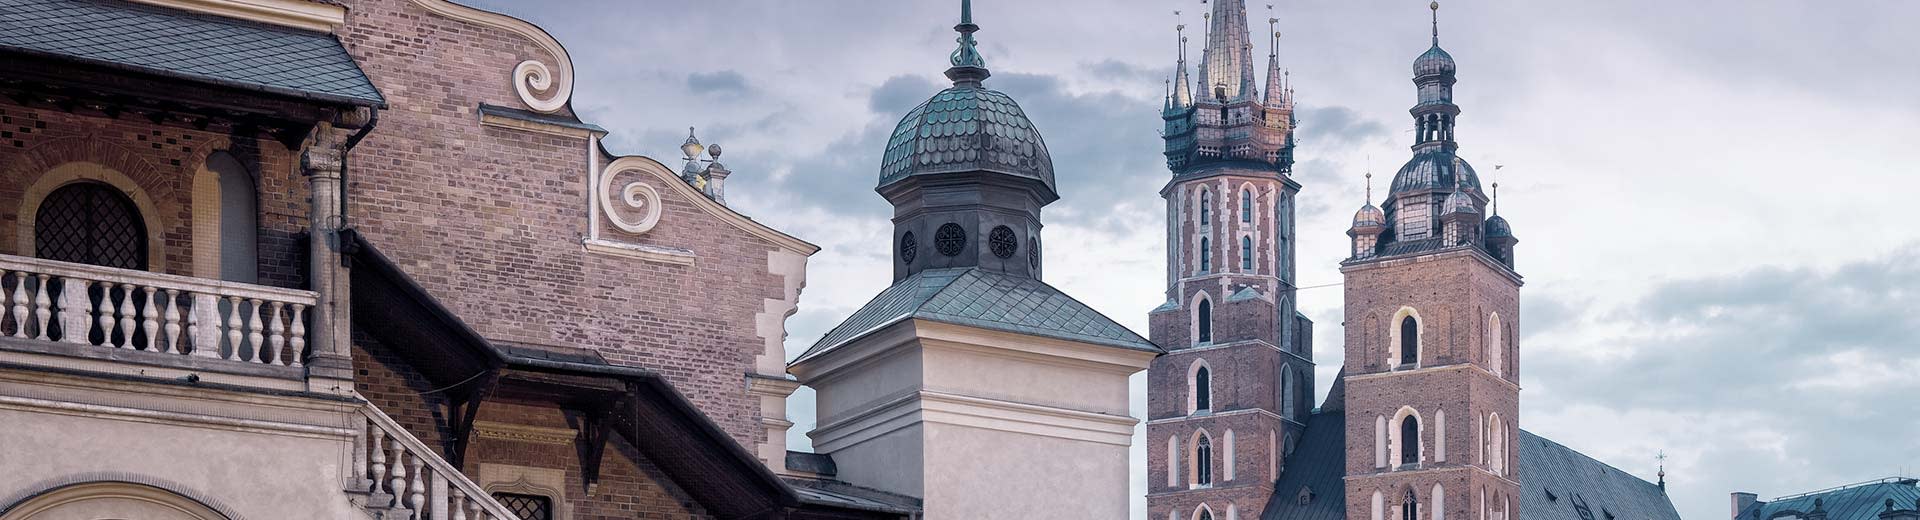 Hermosas iglesias polacas contra un cielo nublado en Krakow.